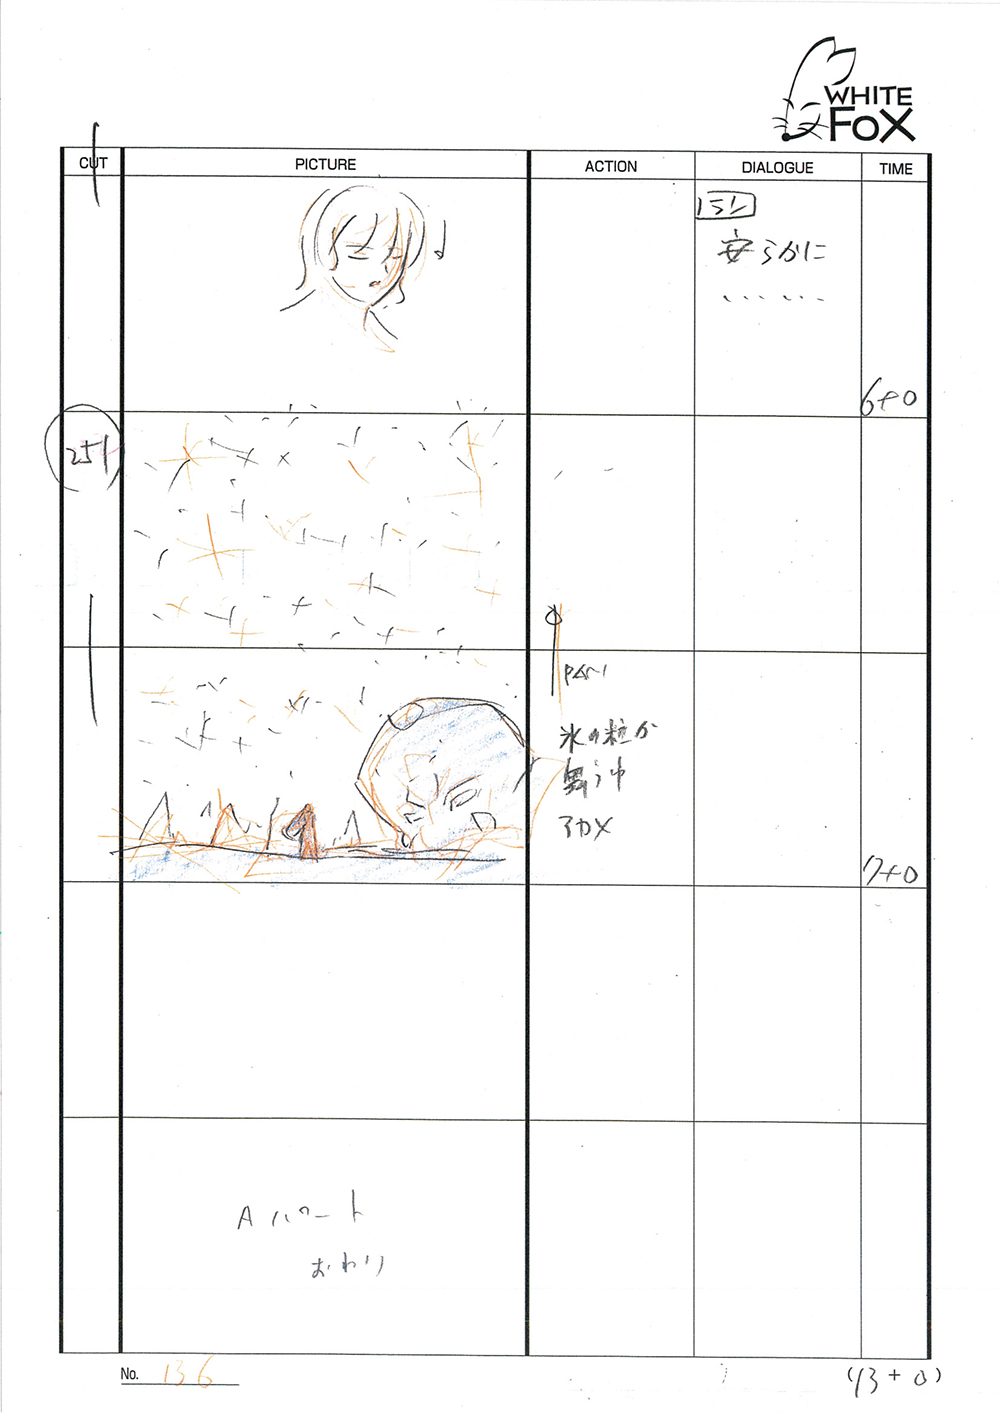 Akame ga Kill Episode 24 Storyboard Leak 141